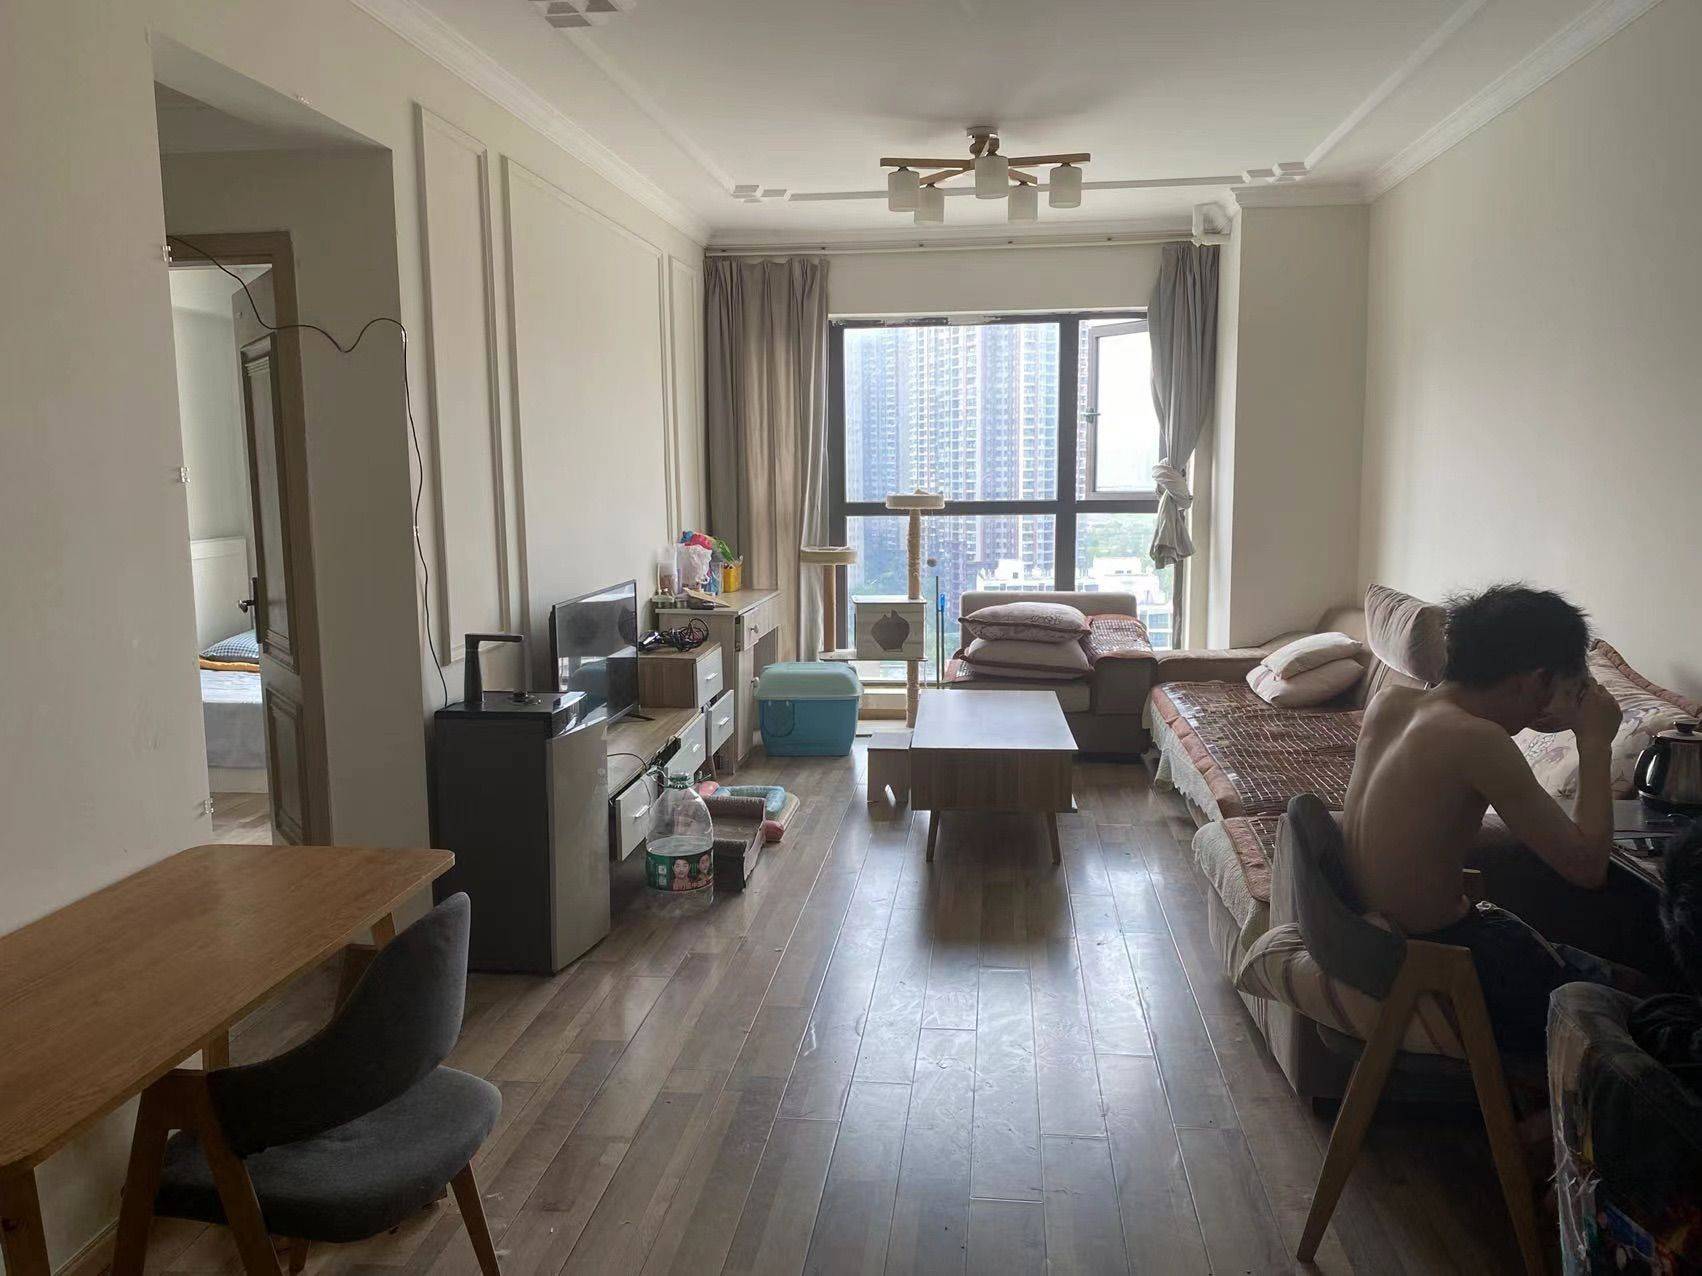 Chengdu-Shuangliu-Cozy Home,Clean&Comfy,No Gender Limit,Hustle & Bustle,“Friends”,Chilled